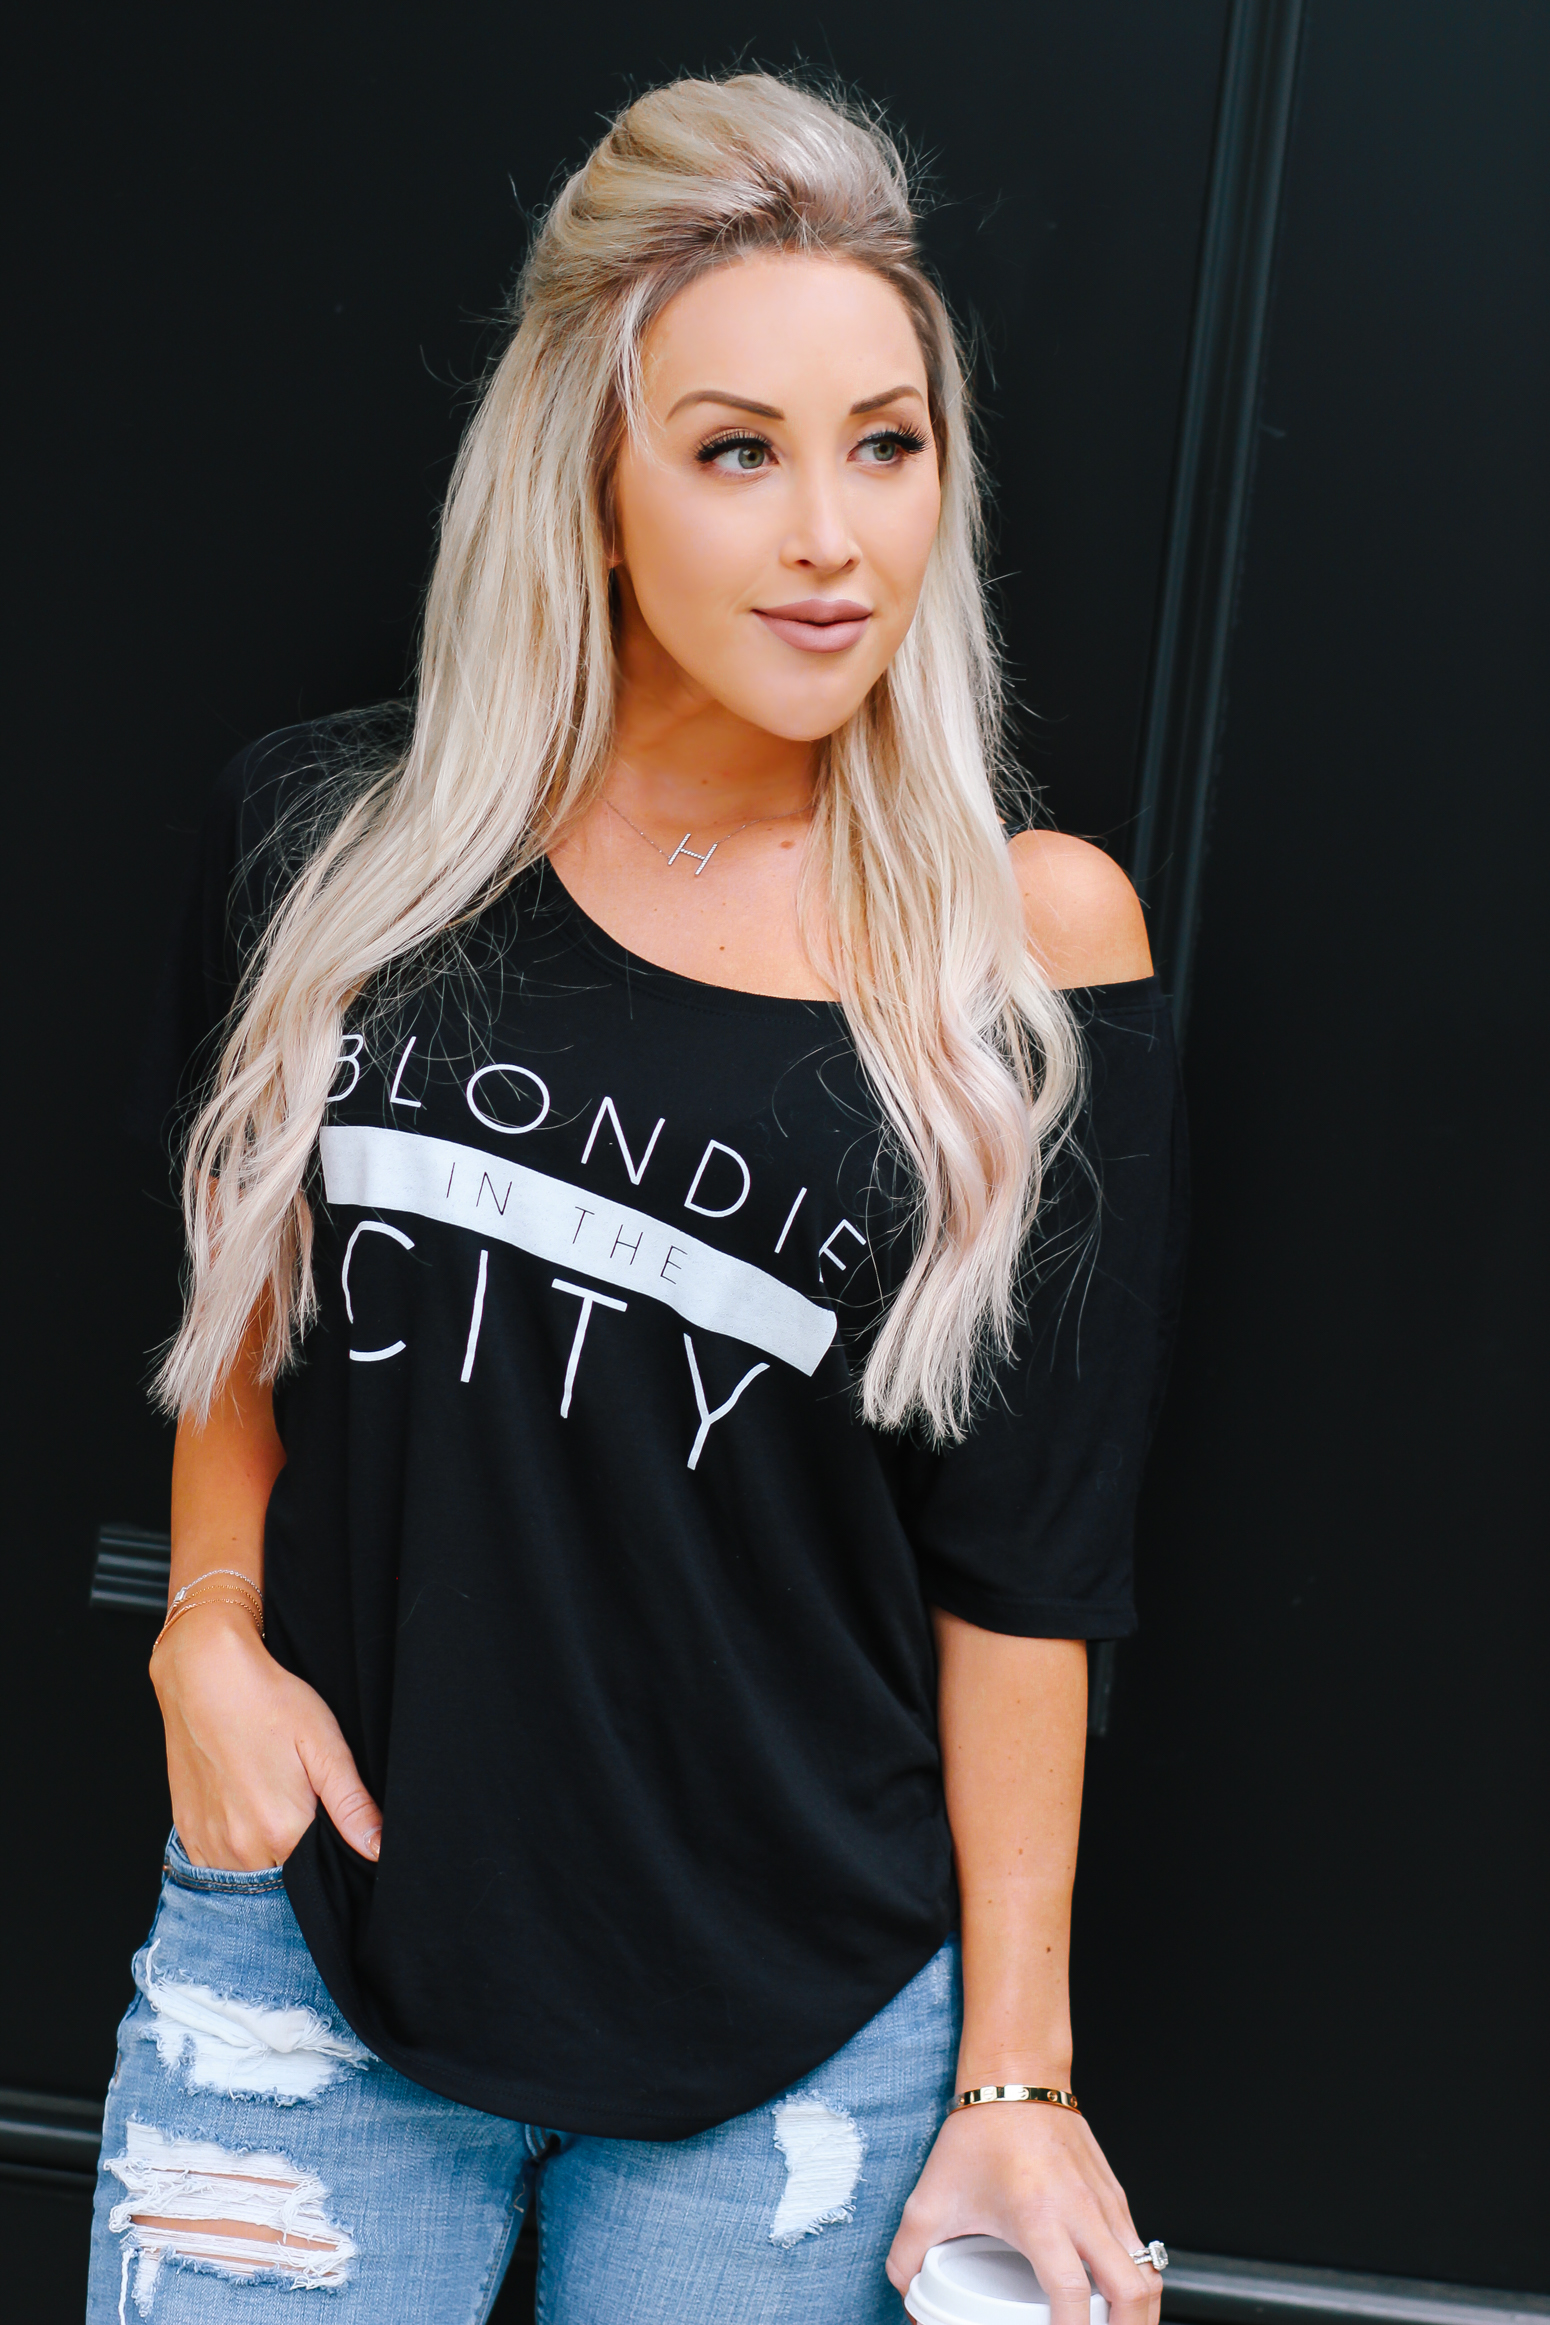 Blondie in the City by Hayley Larue